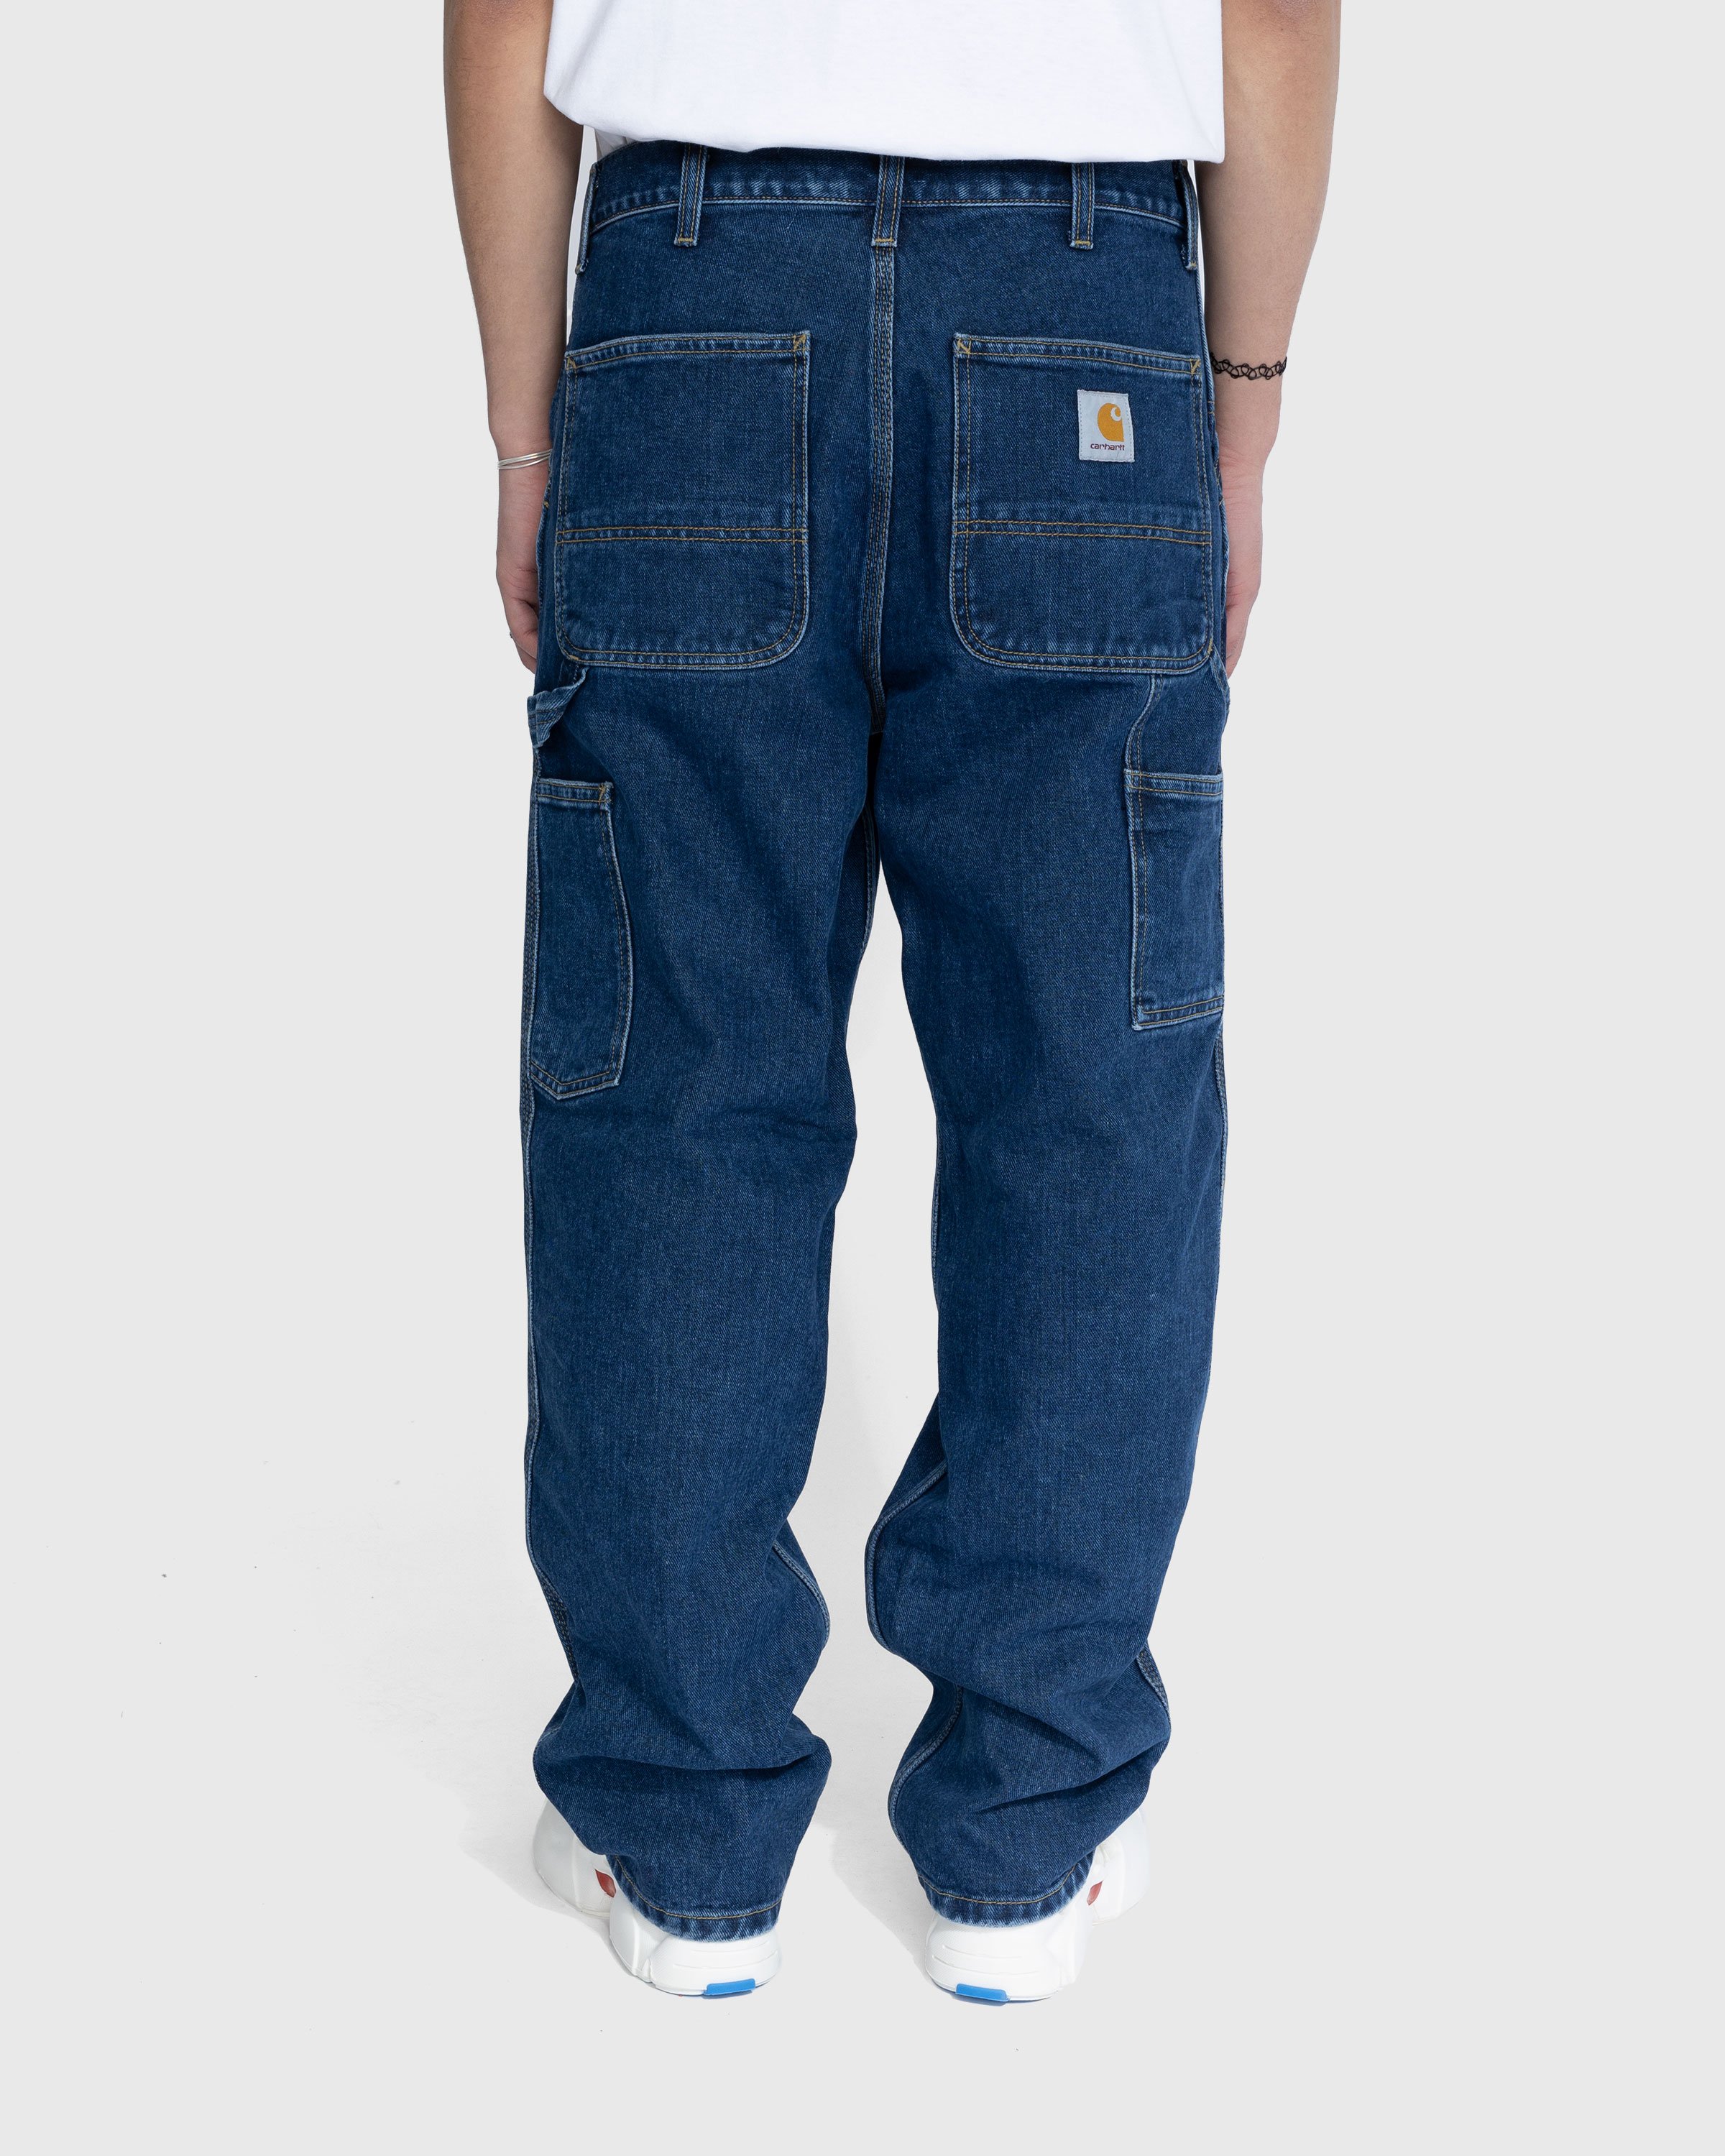 Carhartt WIP – Single Knee Pant Blue | Highsnobiety Shop